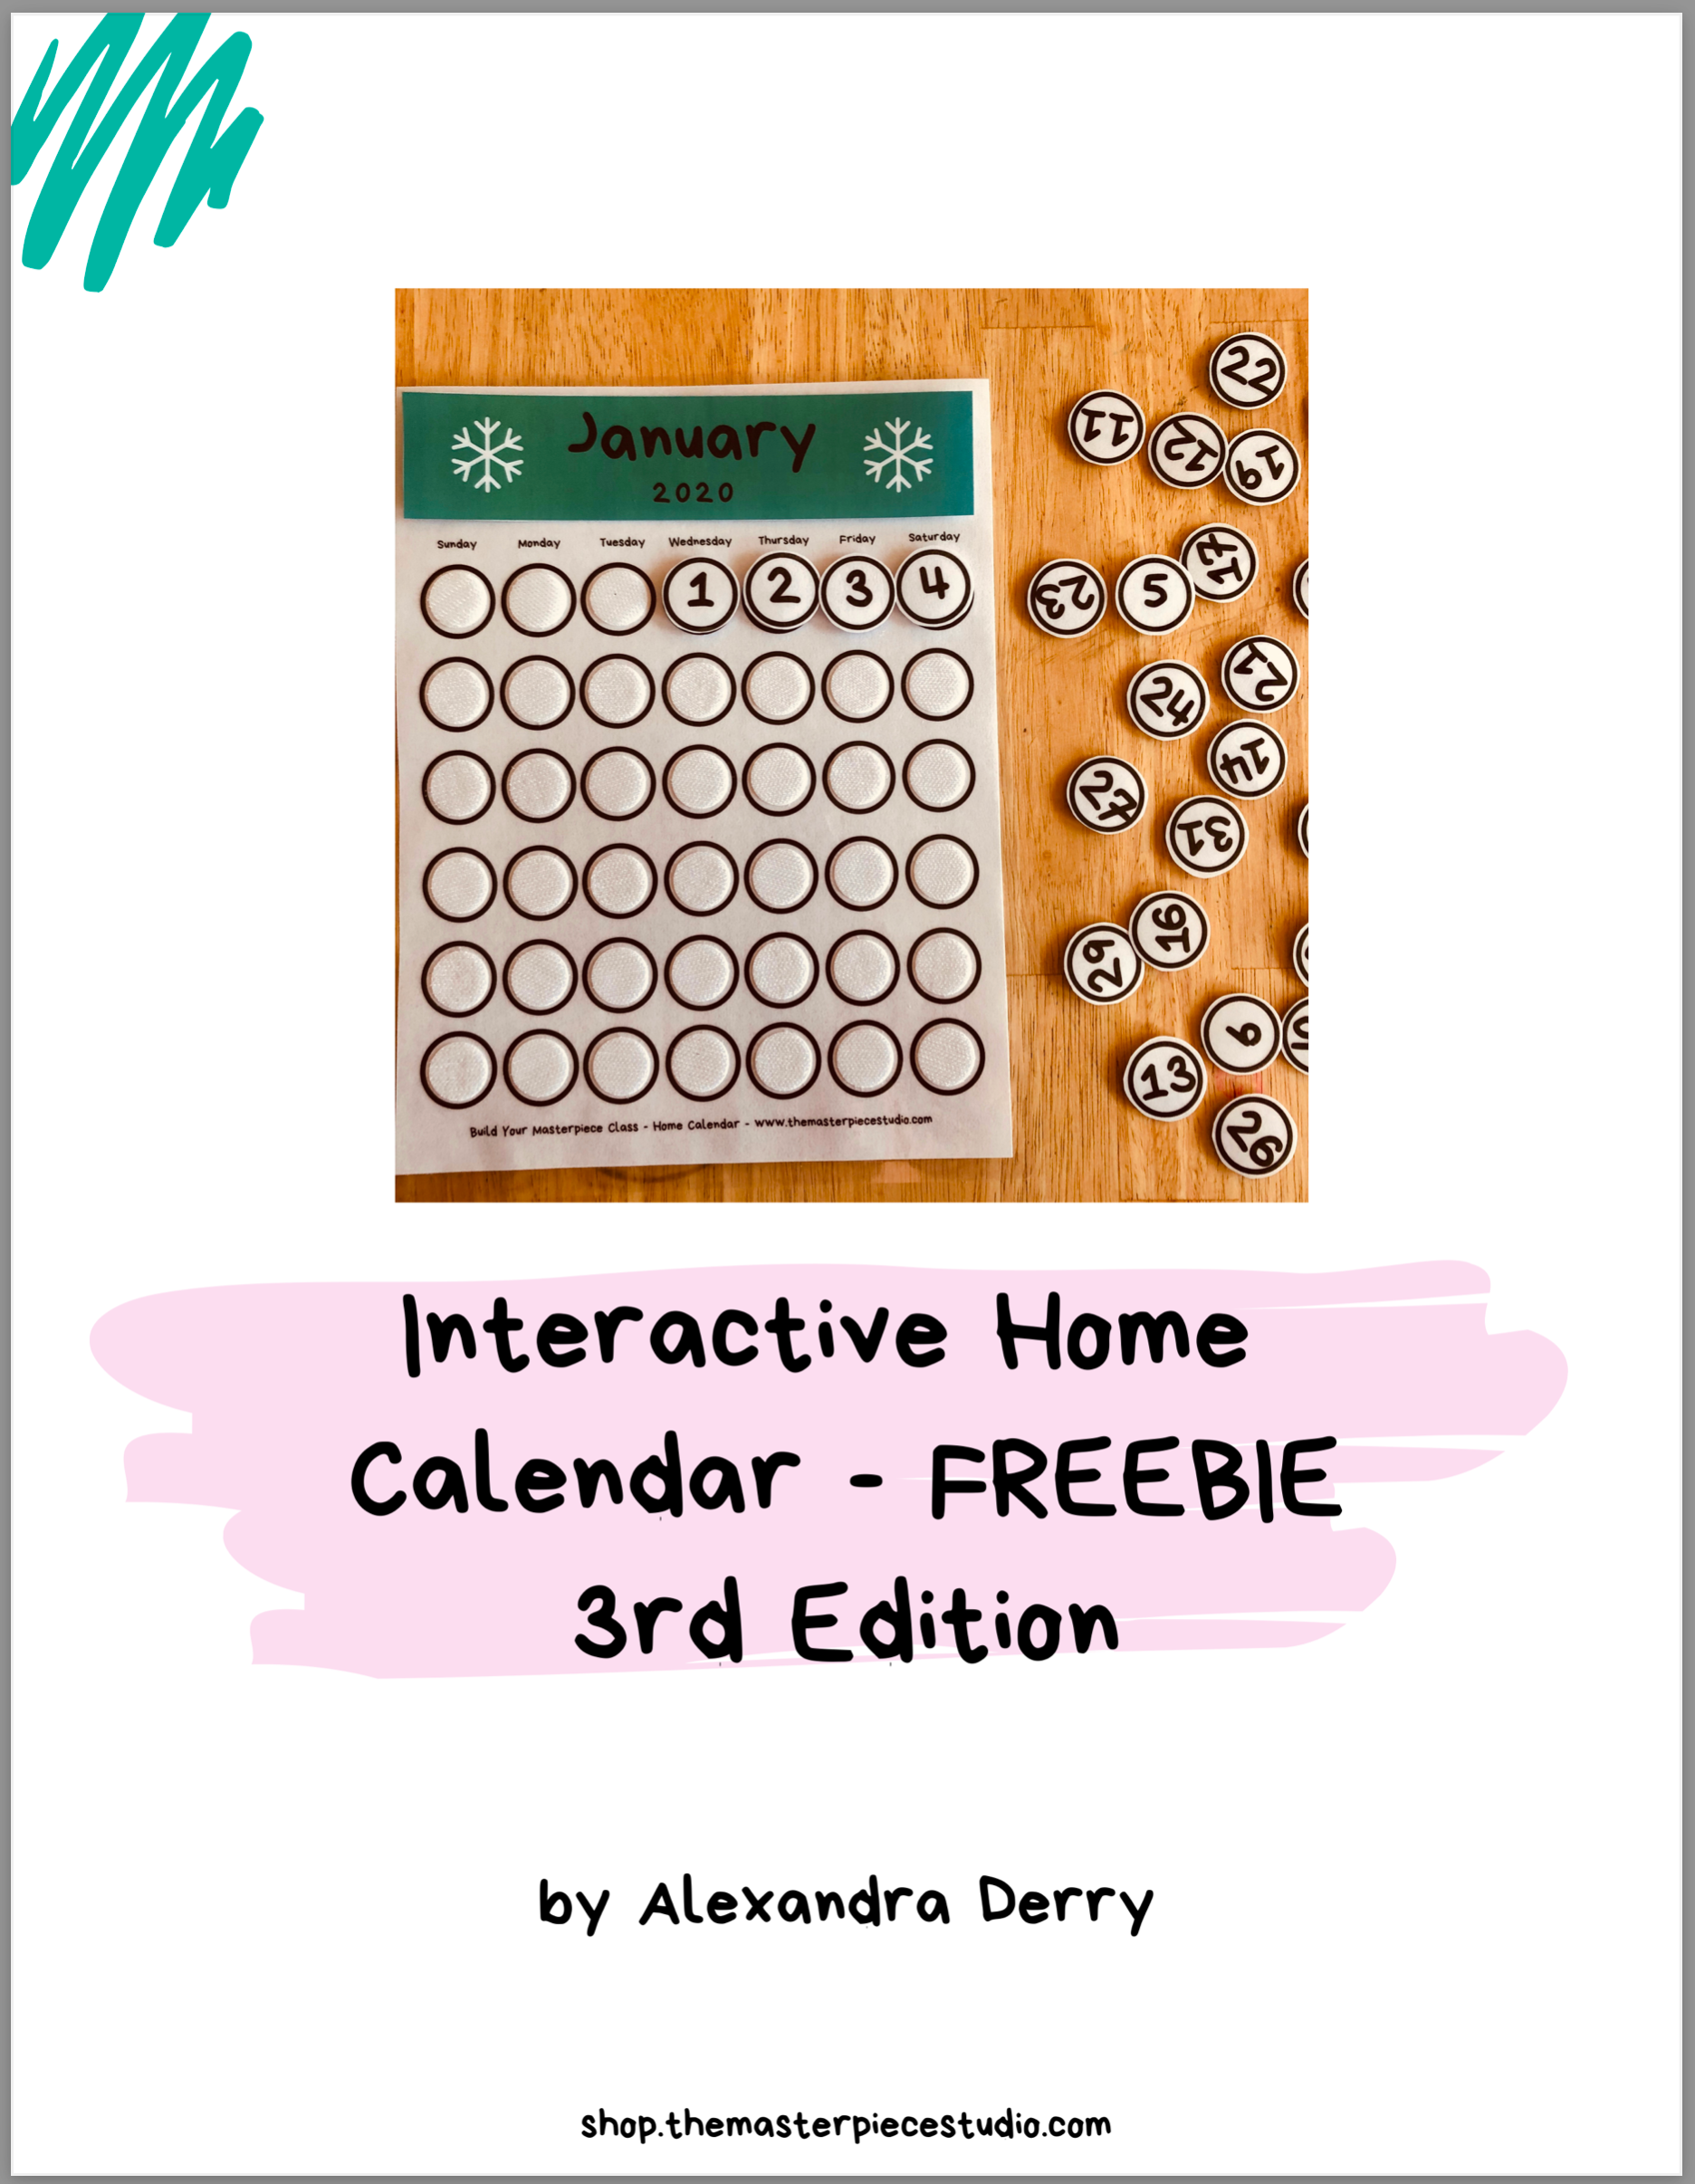 Interactive Home Calendar - FREEBIE -3rd Edition